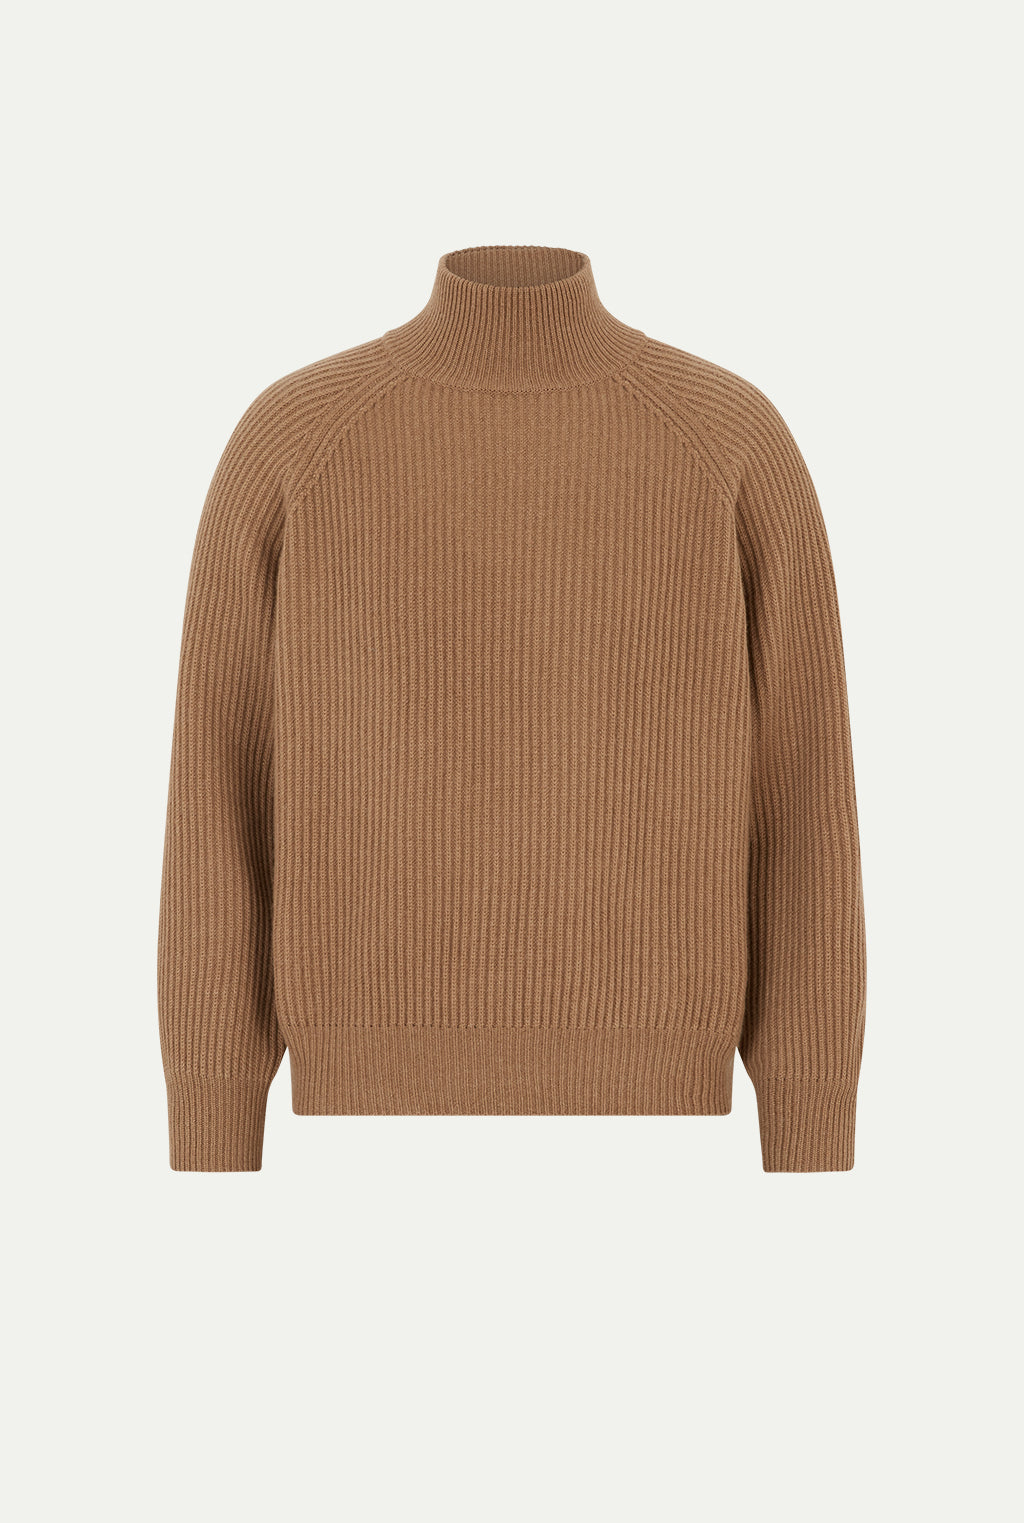 LETTE unisex cashmere sweater